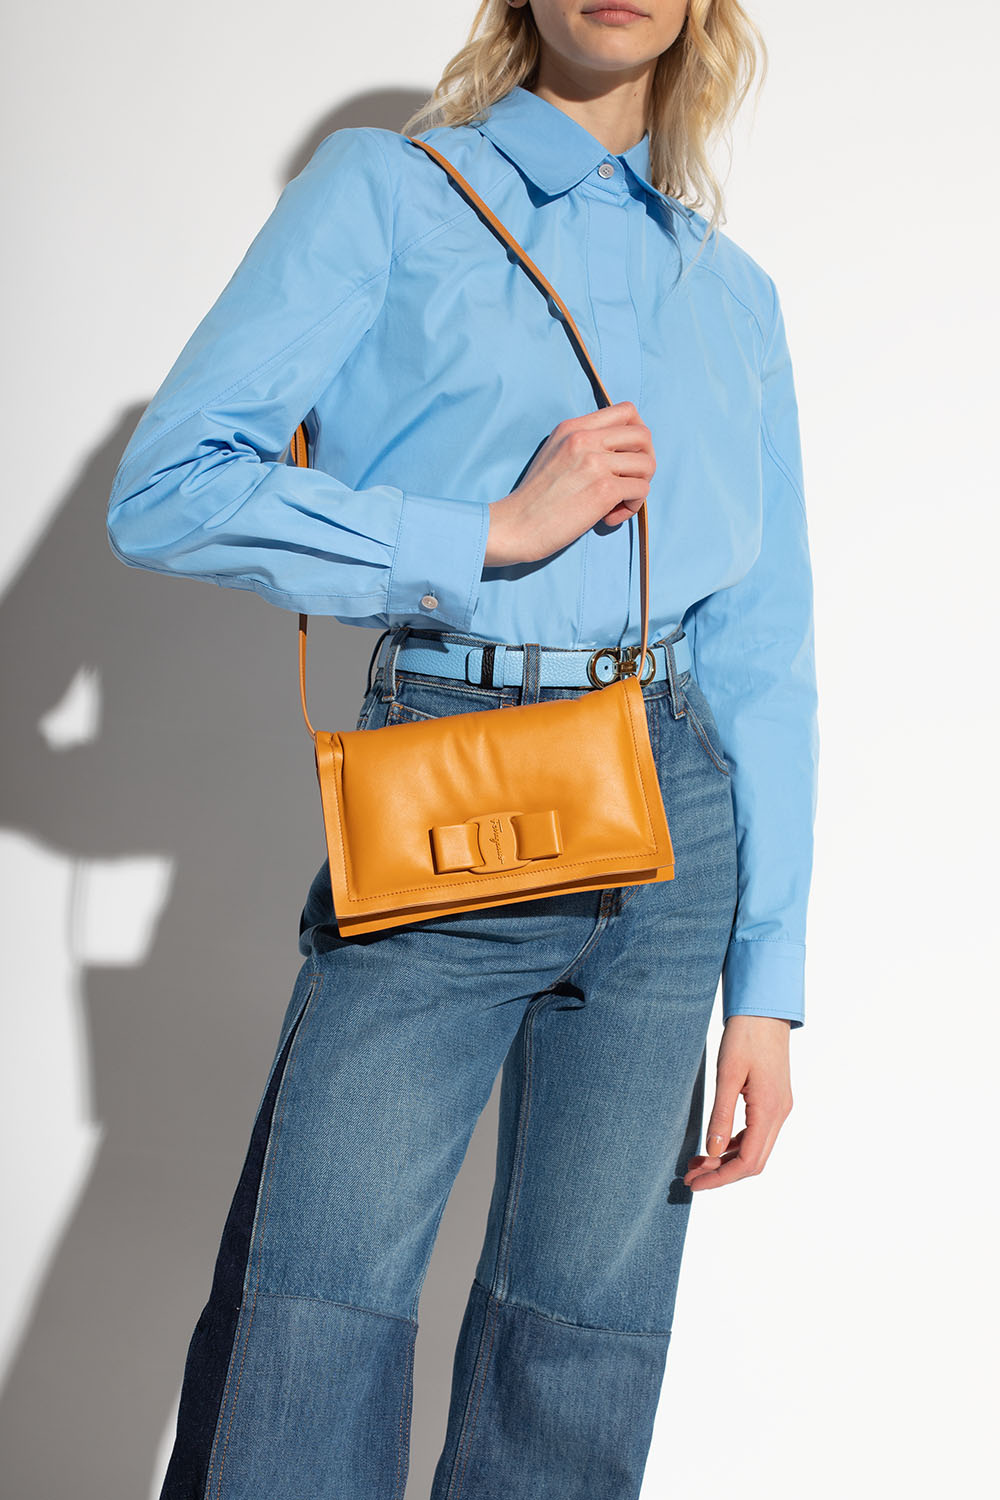 FERRAGAMO 'Viva Mini' shoulder bag, Women's Bags